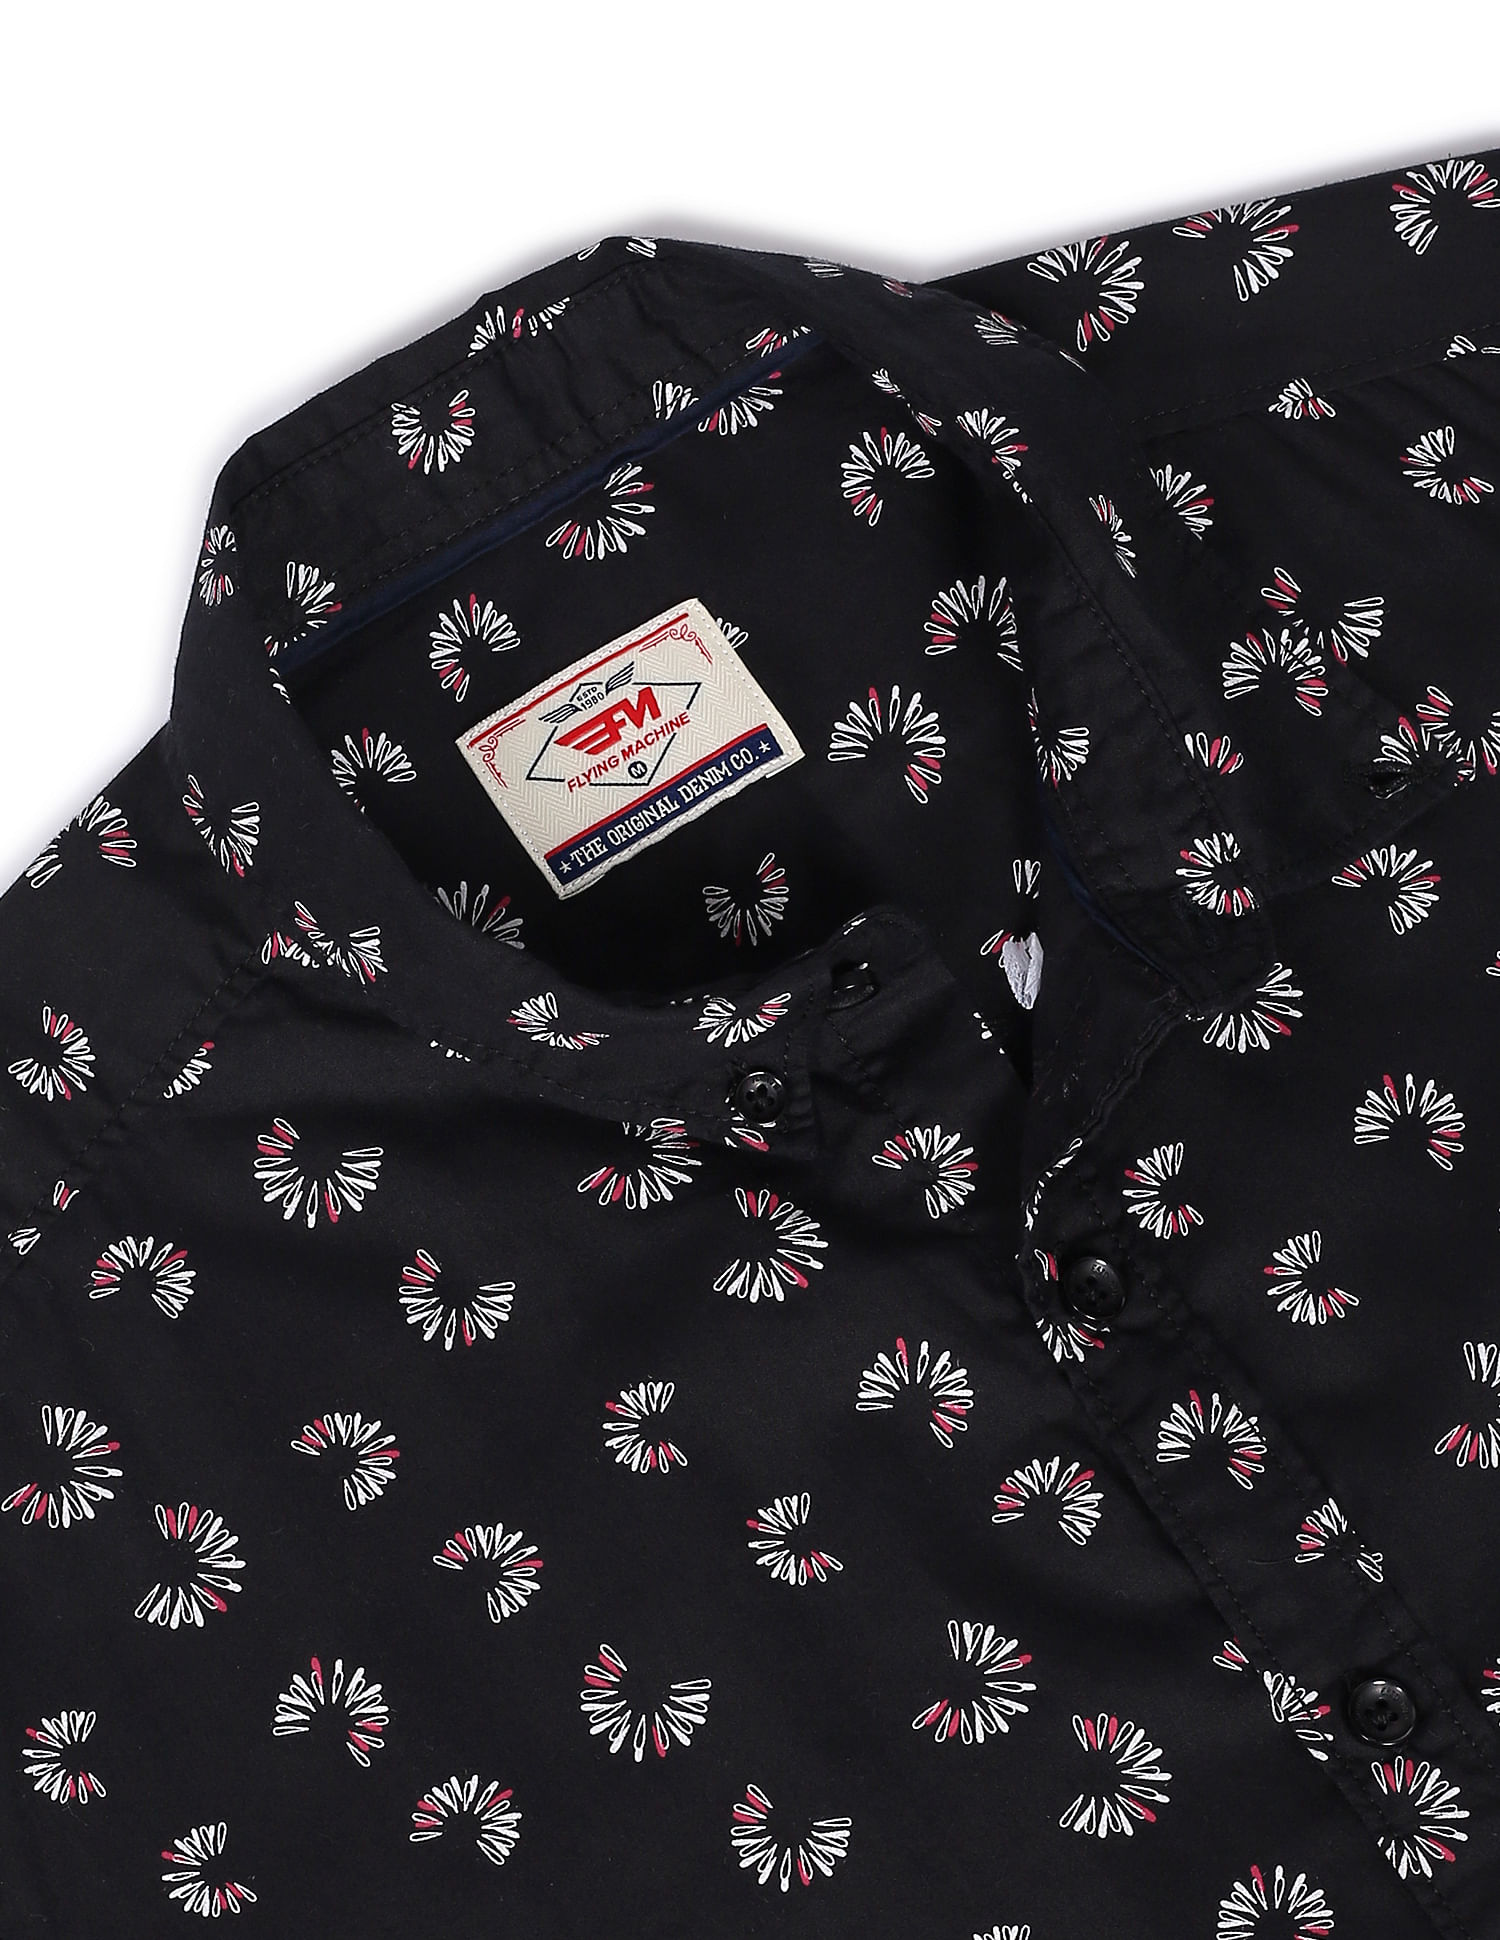 Black Mens Floral Shirt Casual Button Down Long Sleeve Flower Printed Shirt